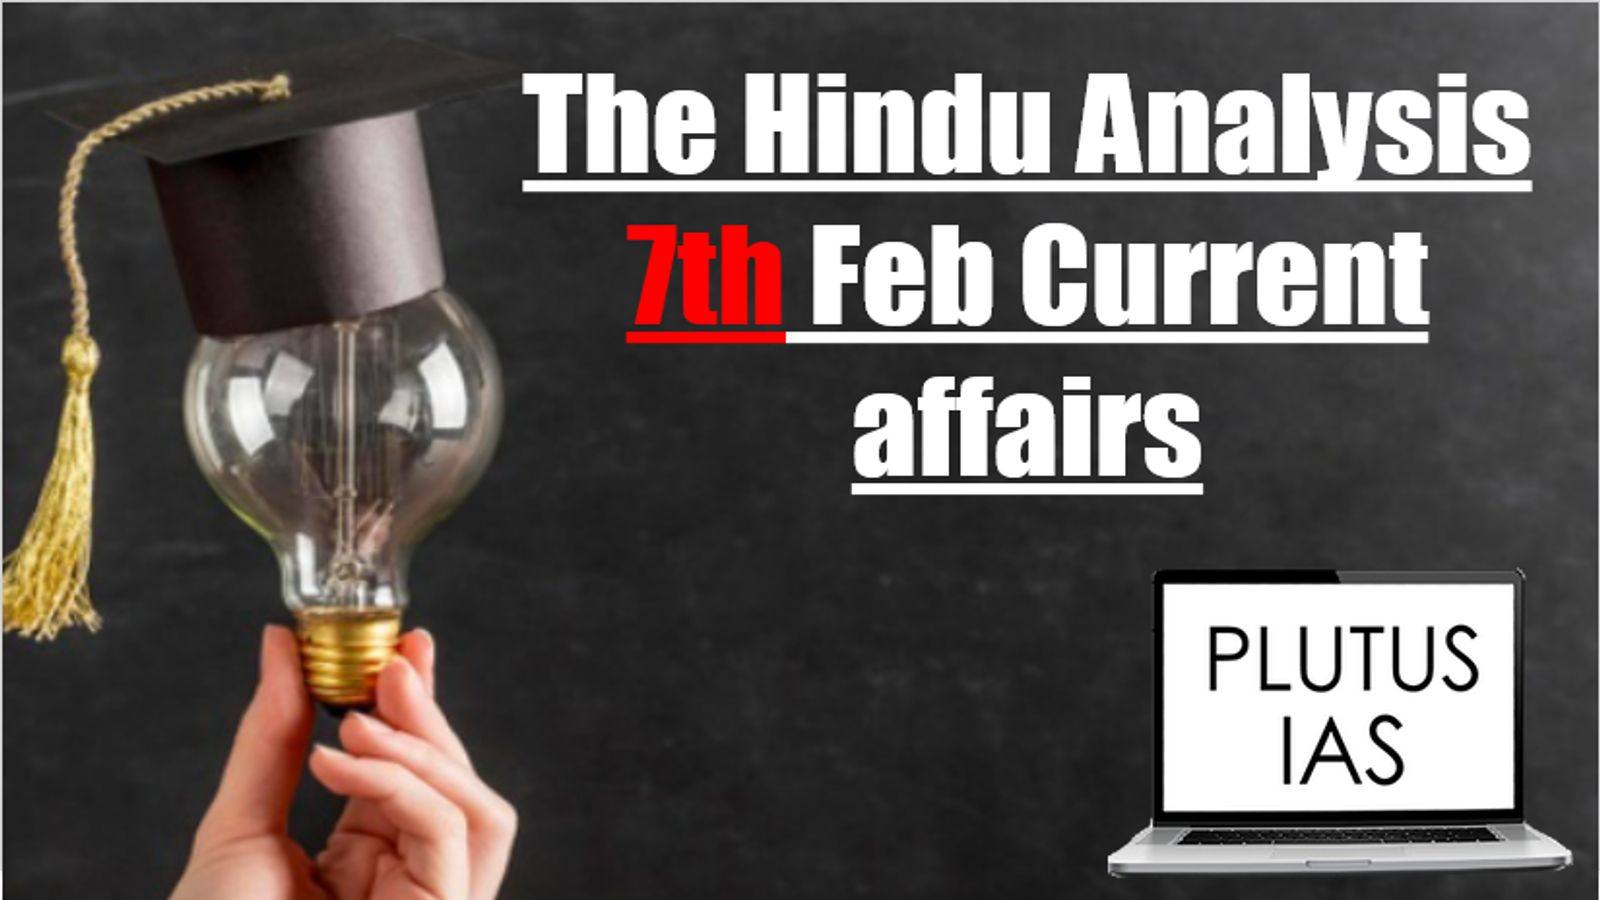 The Hindu Analysis 7th February